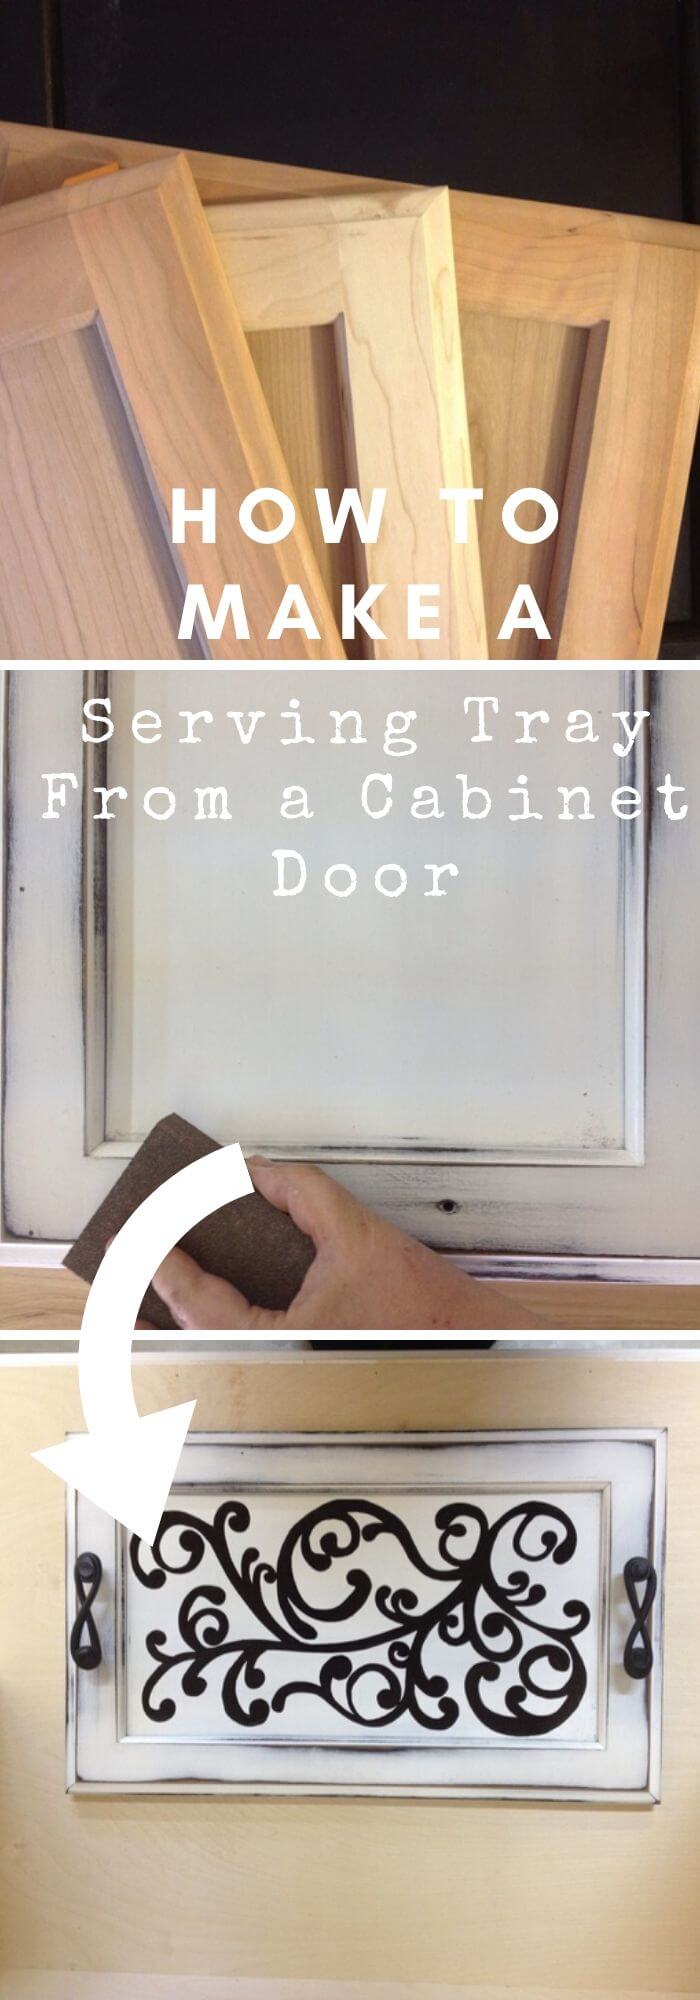 16 repurposed cabinet door ideas